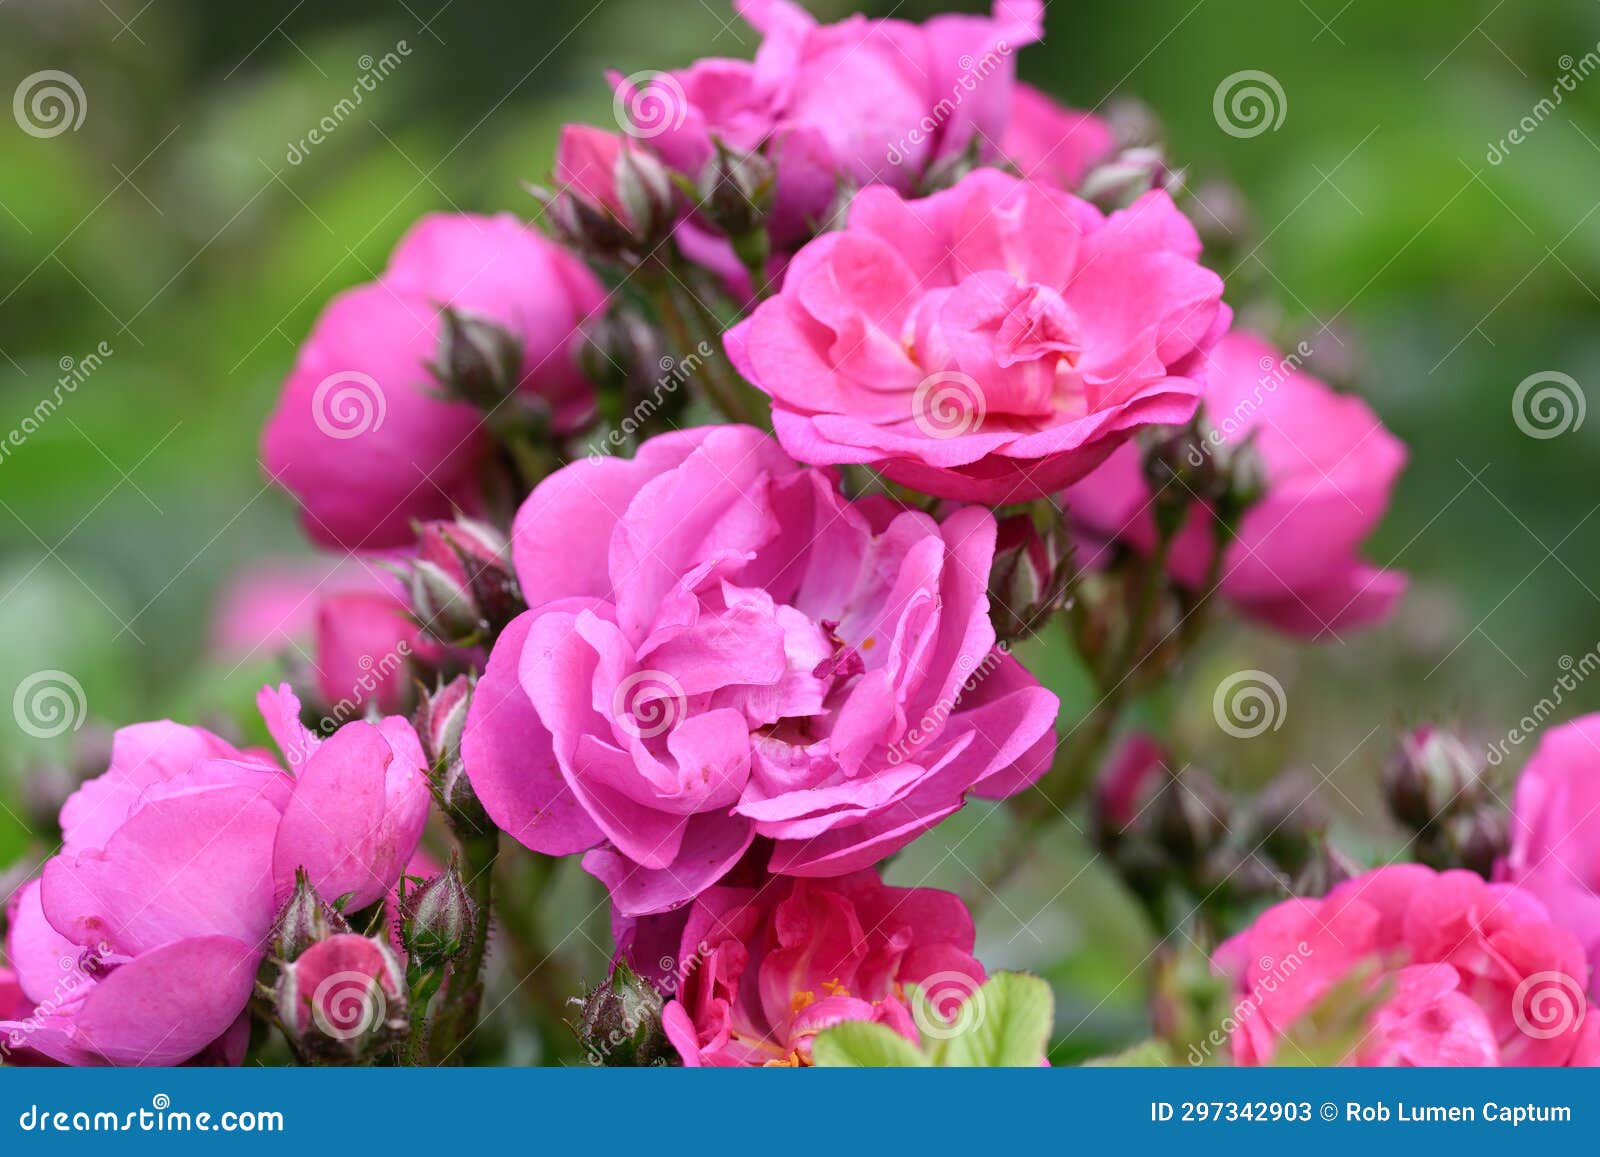 rambler rose rosa perfumy siluetta, double pink-violet flowers